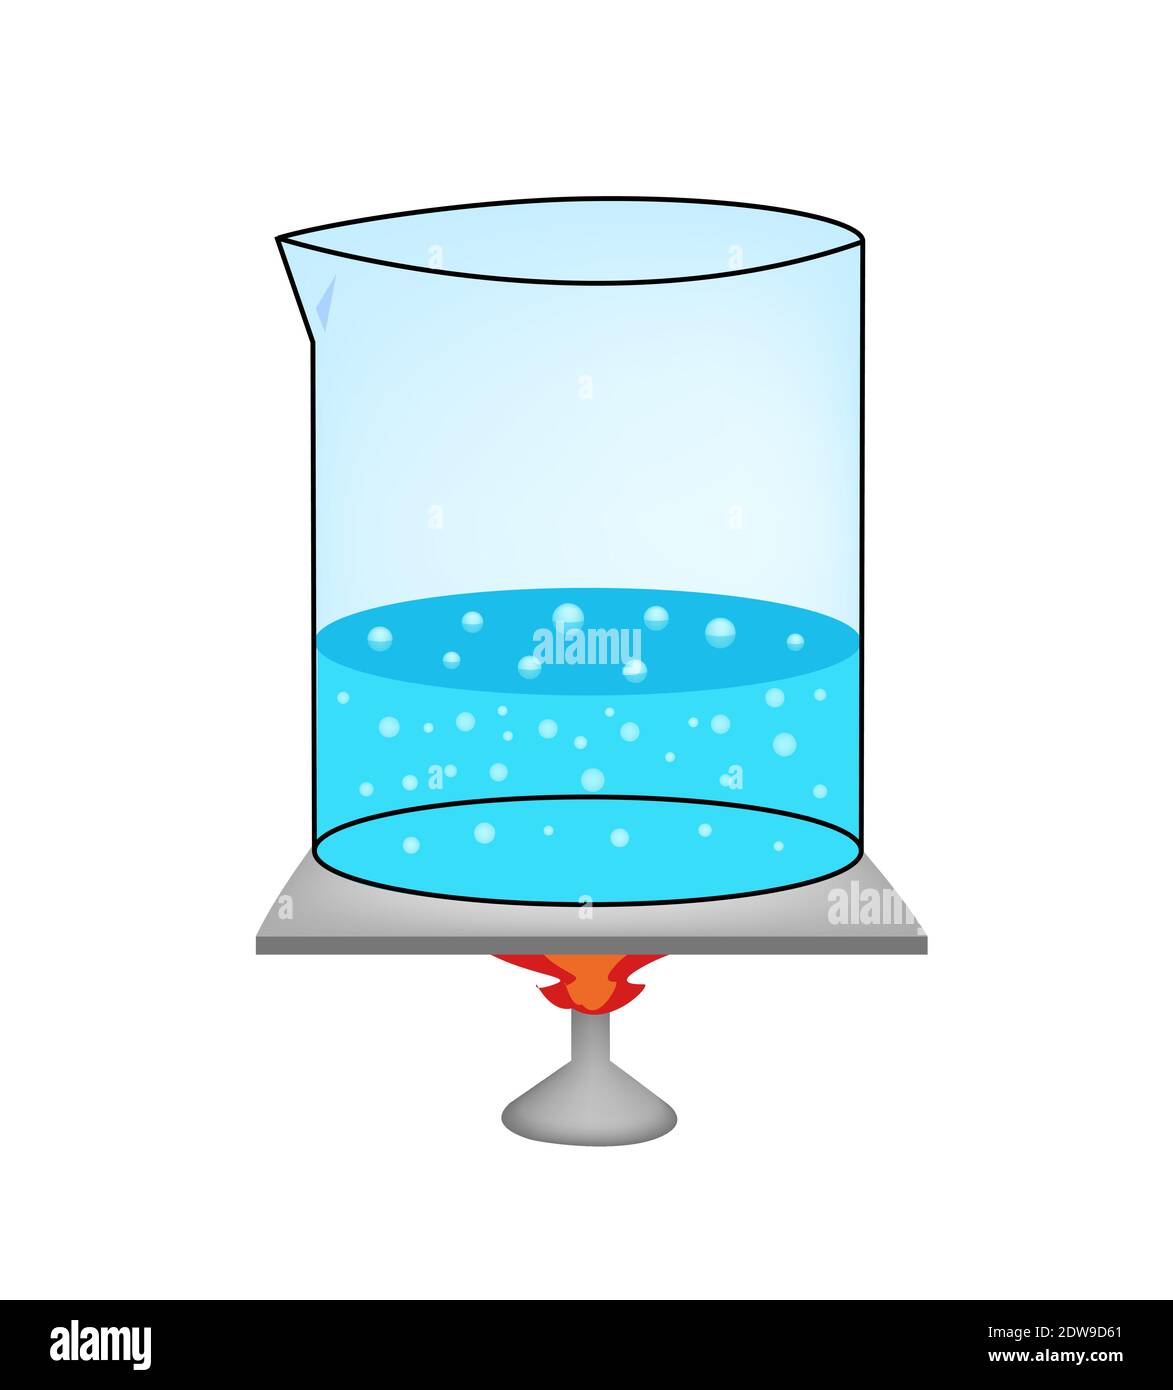 https://c8.alamy.com/comp/2DW9D61/glass-beaker-with-boiling-water-vector-illustration-2DW9D61.jpg